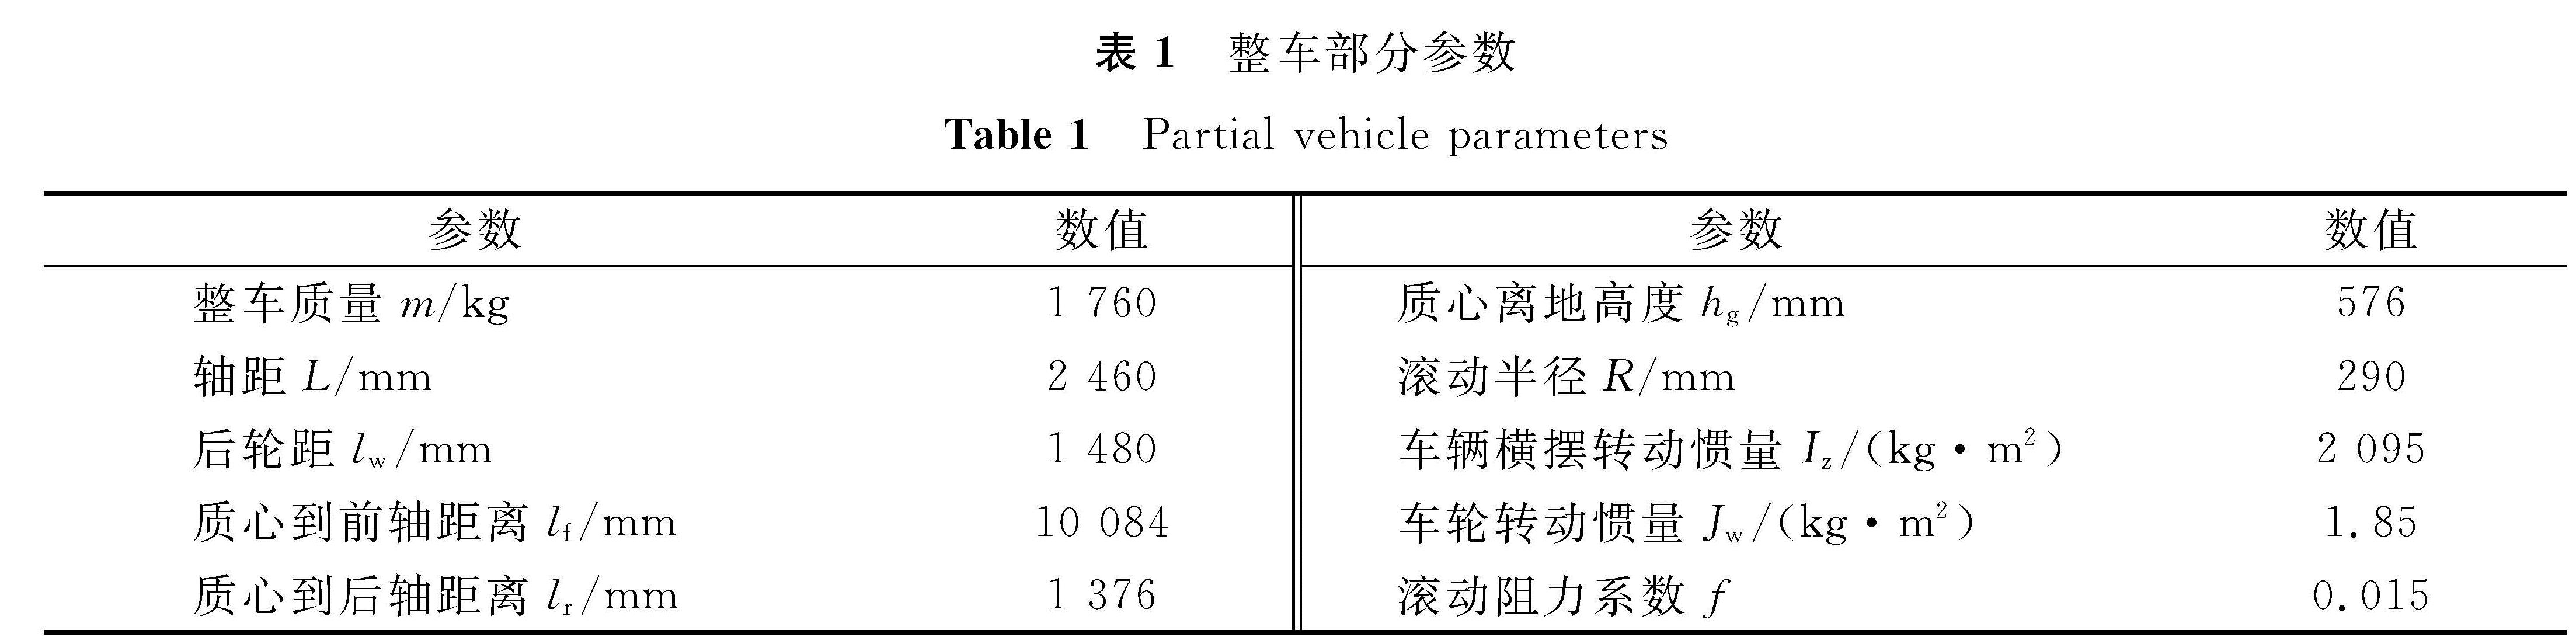 表1 整车部分参数<br/>Table 1 Partial vehicle parameters